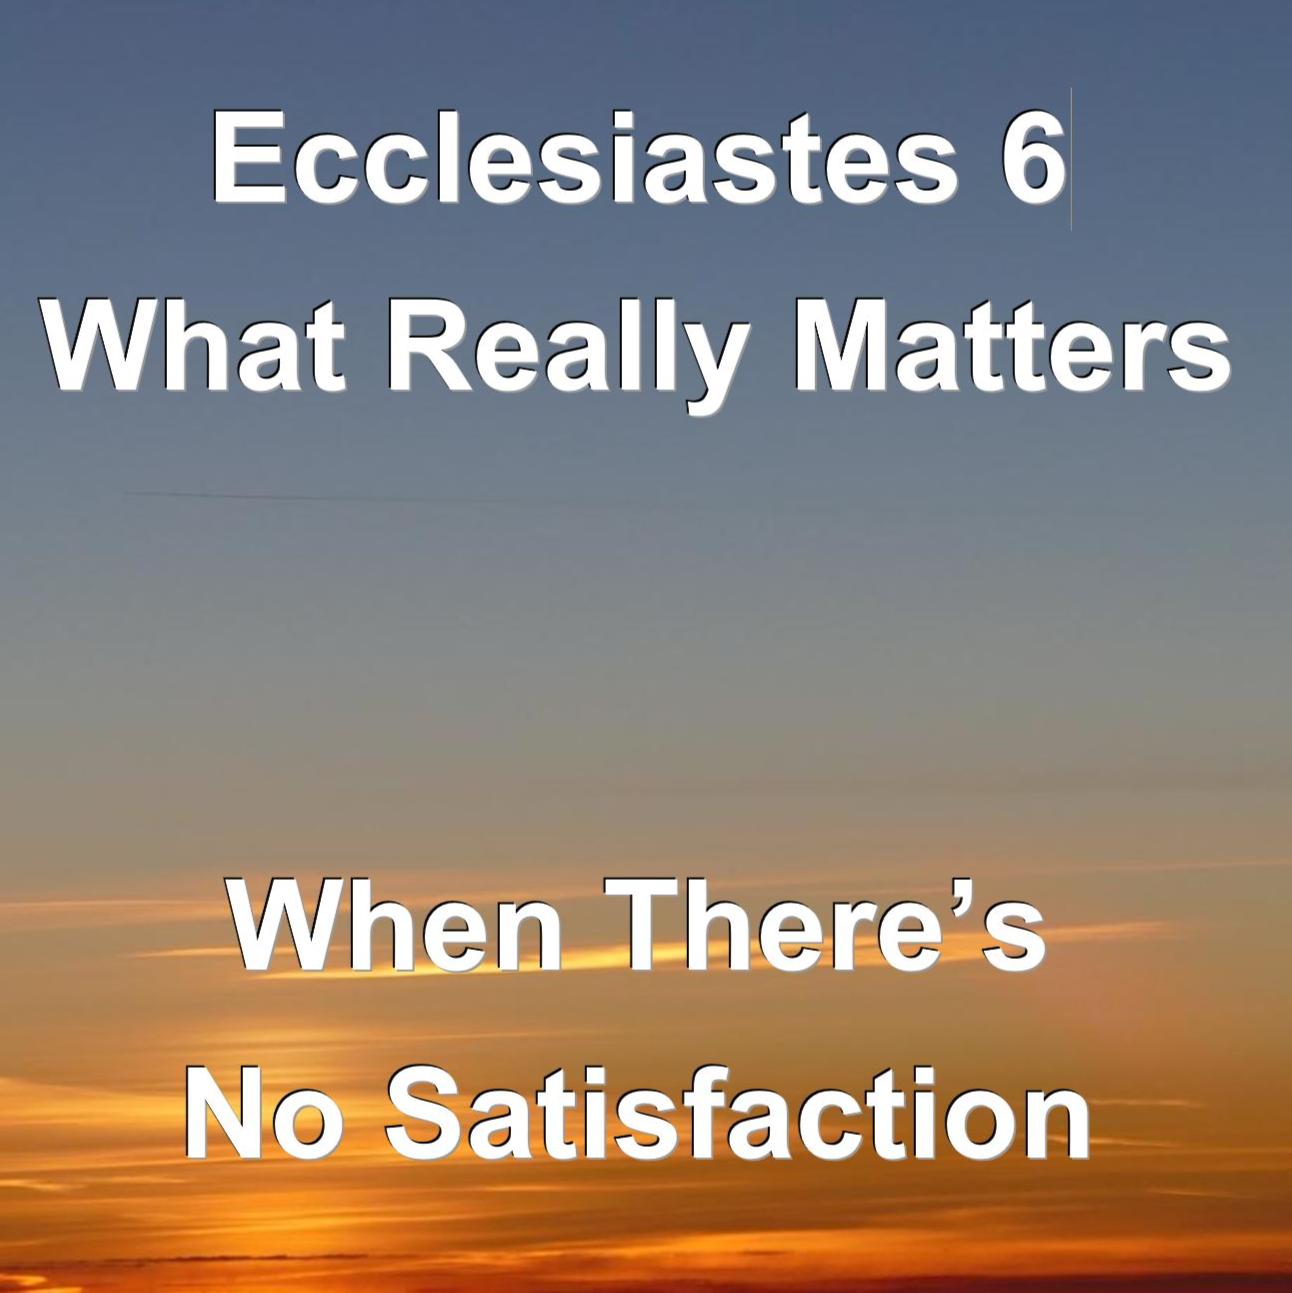 Ecclesiastes 6